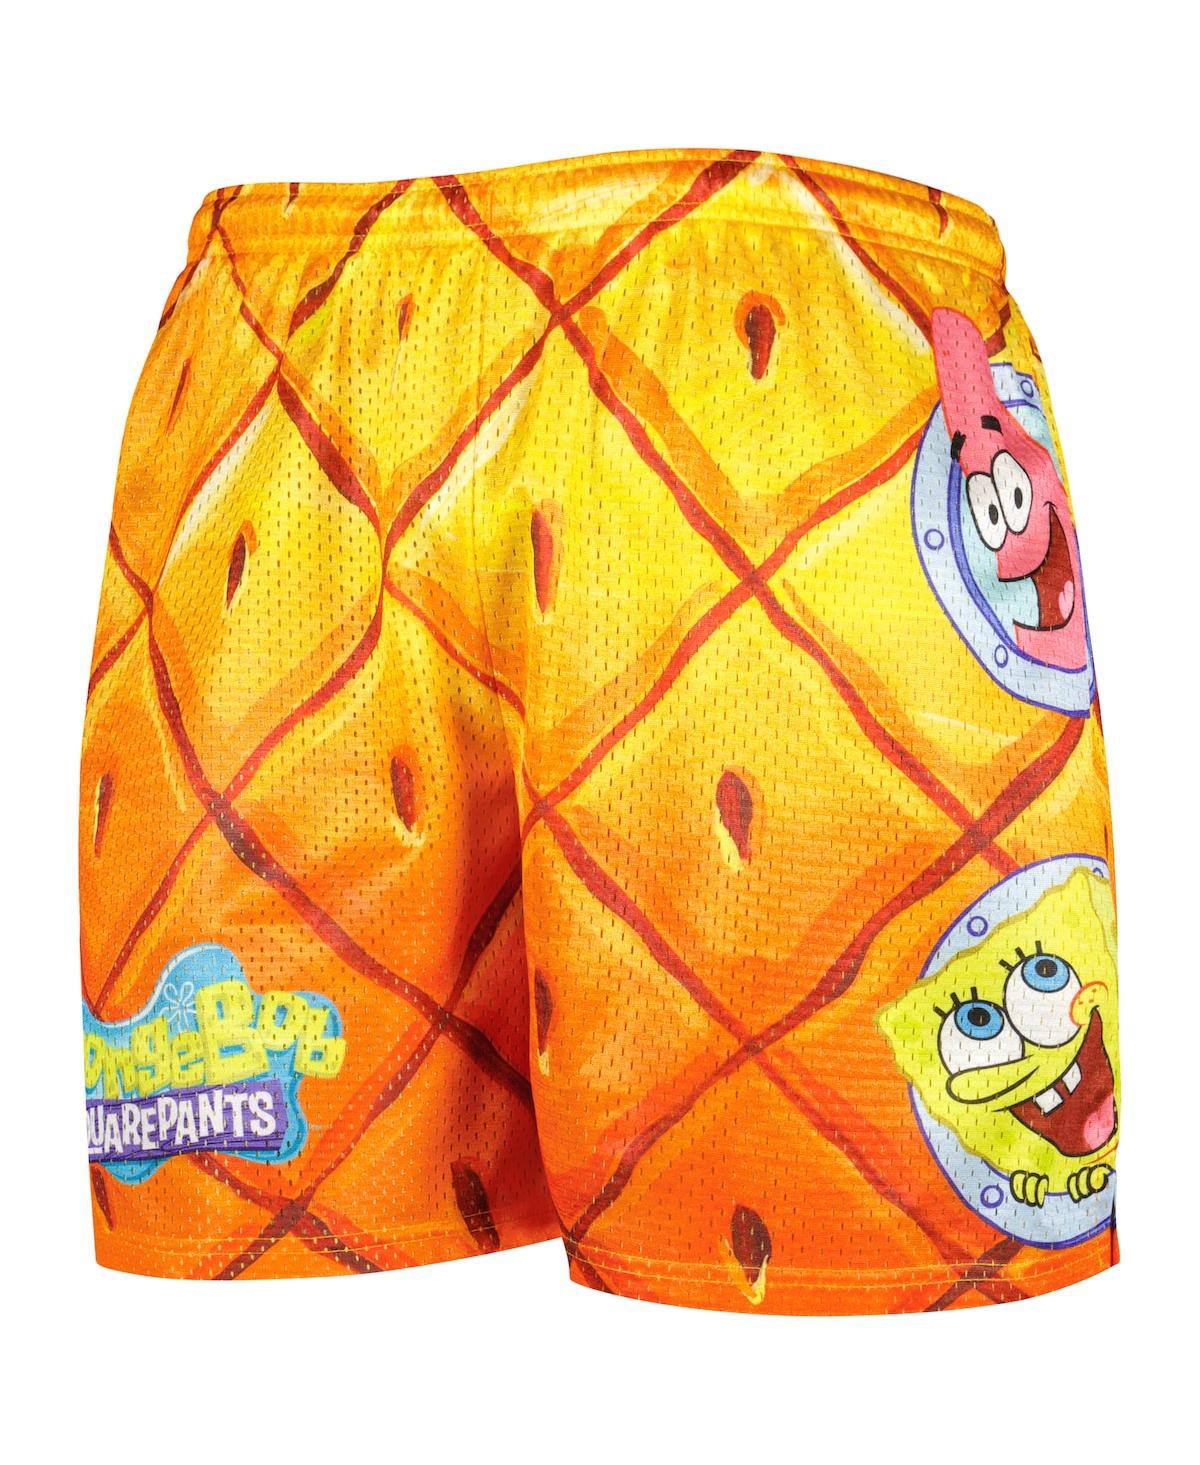 Shop Chalk Line Men's  Orange Spongebob Squarepants Shorts